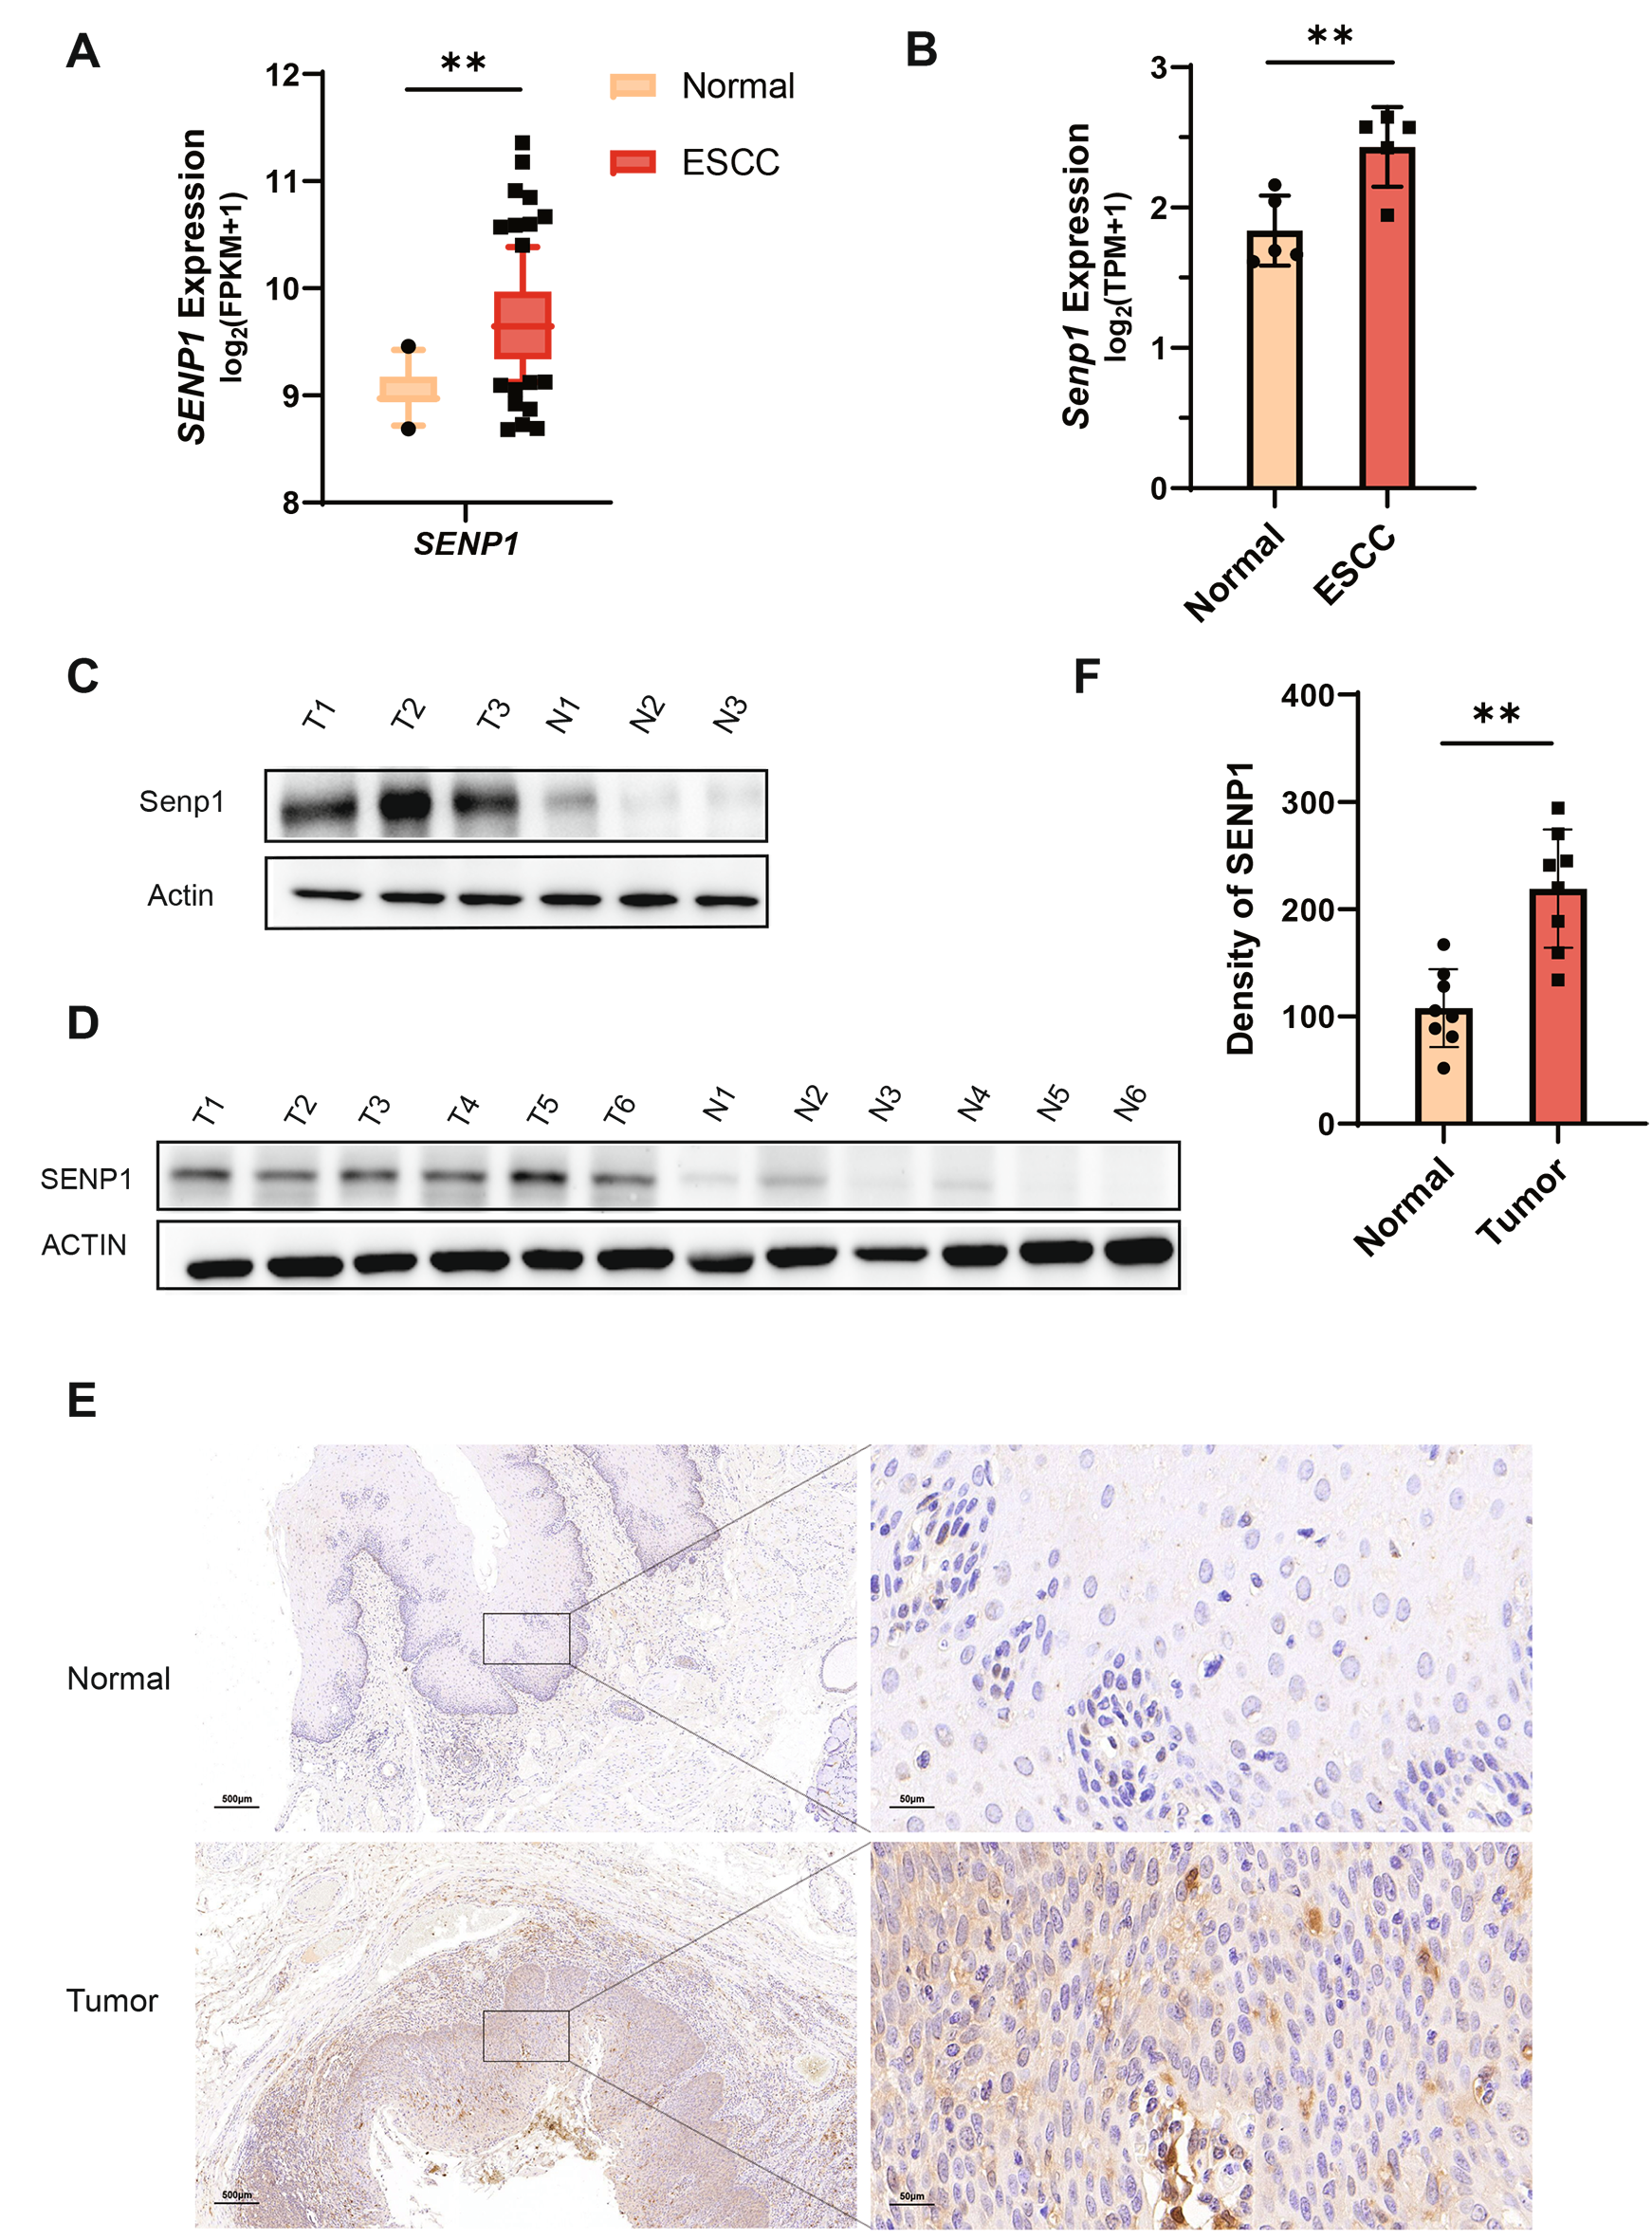 Suppressing SENP1 inhibits esophageal squamous carcinoma cell growth via SIRT6 SUMOylation